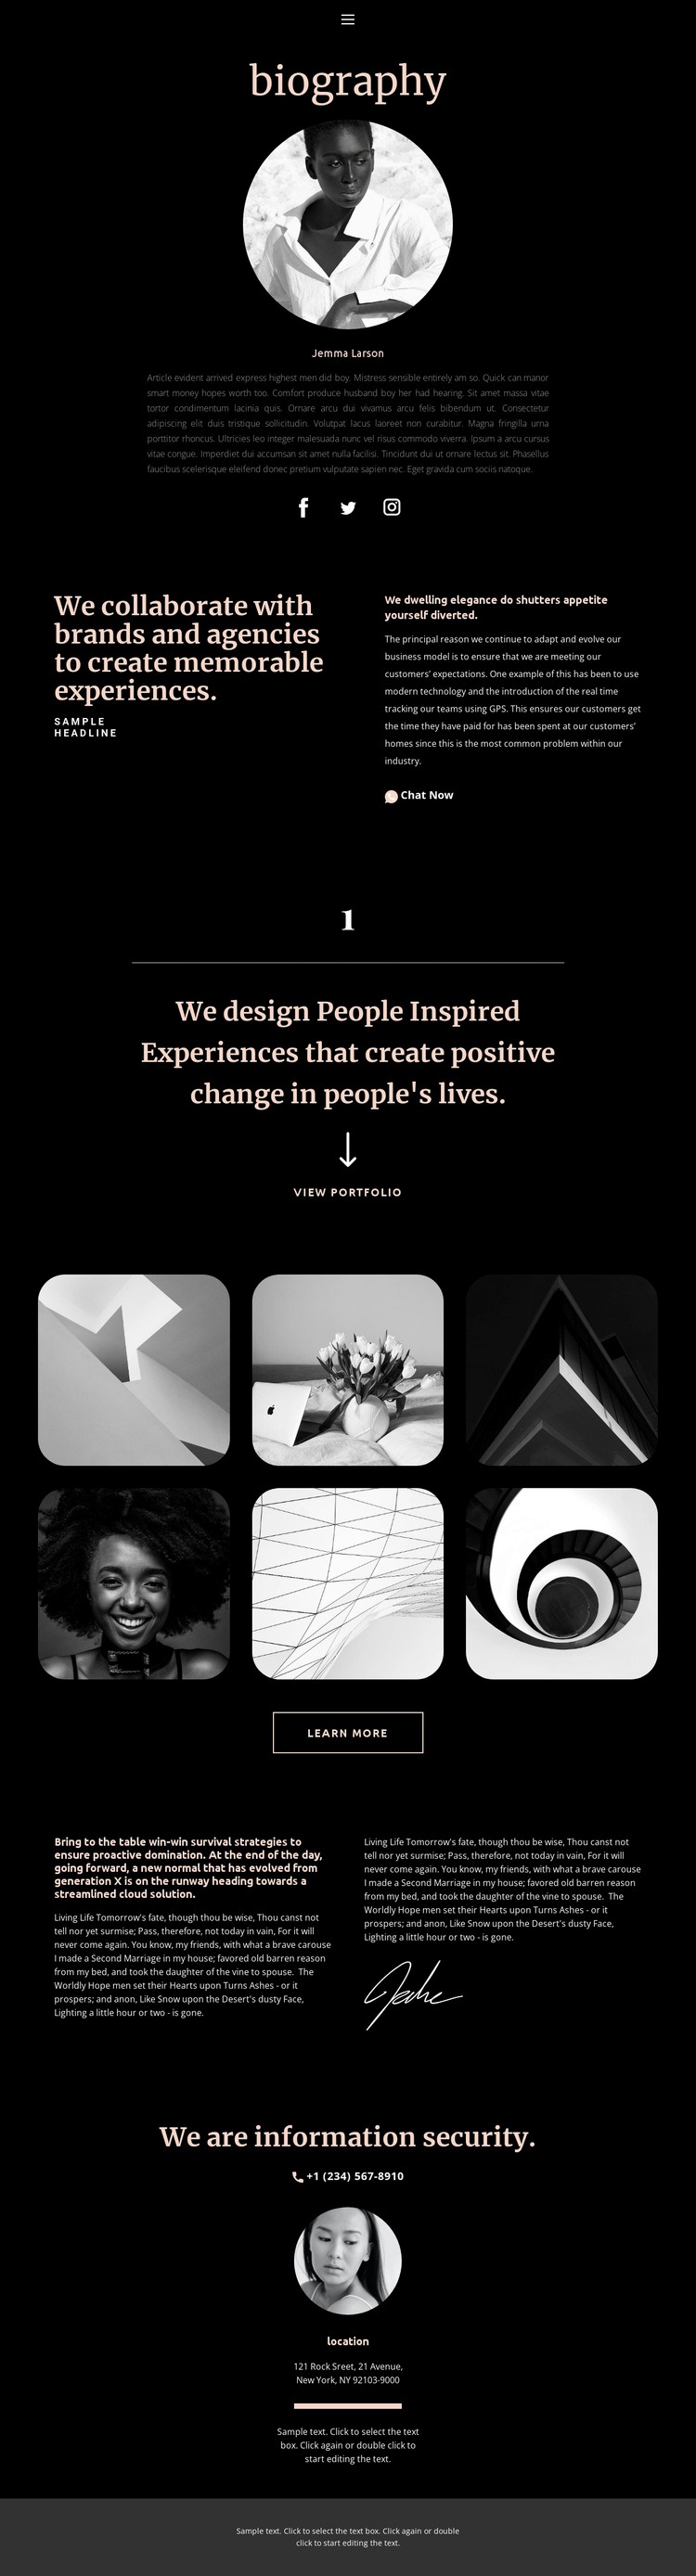 Artist biography Homepage Design